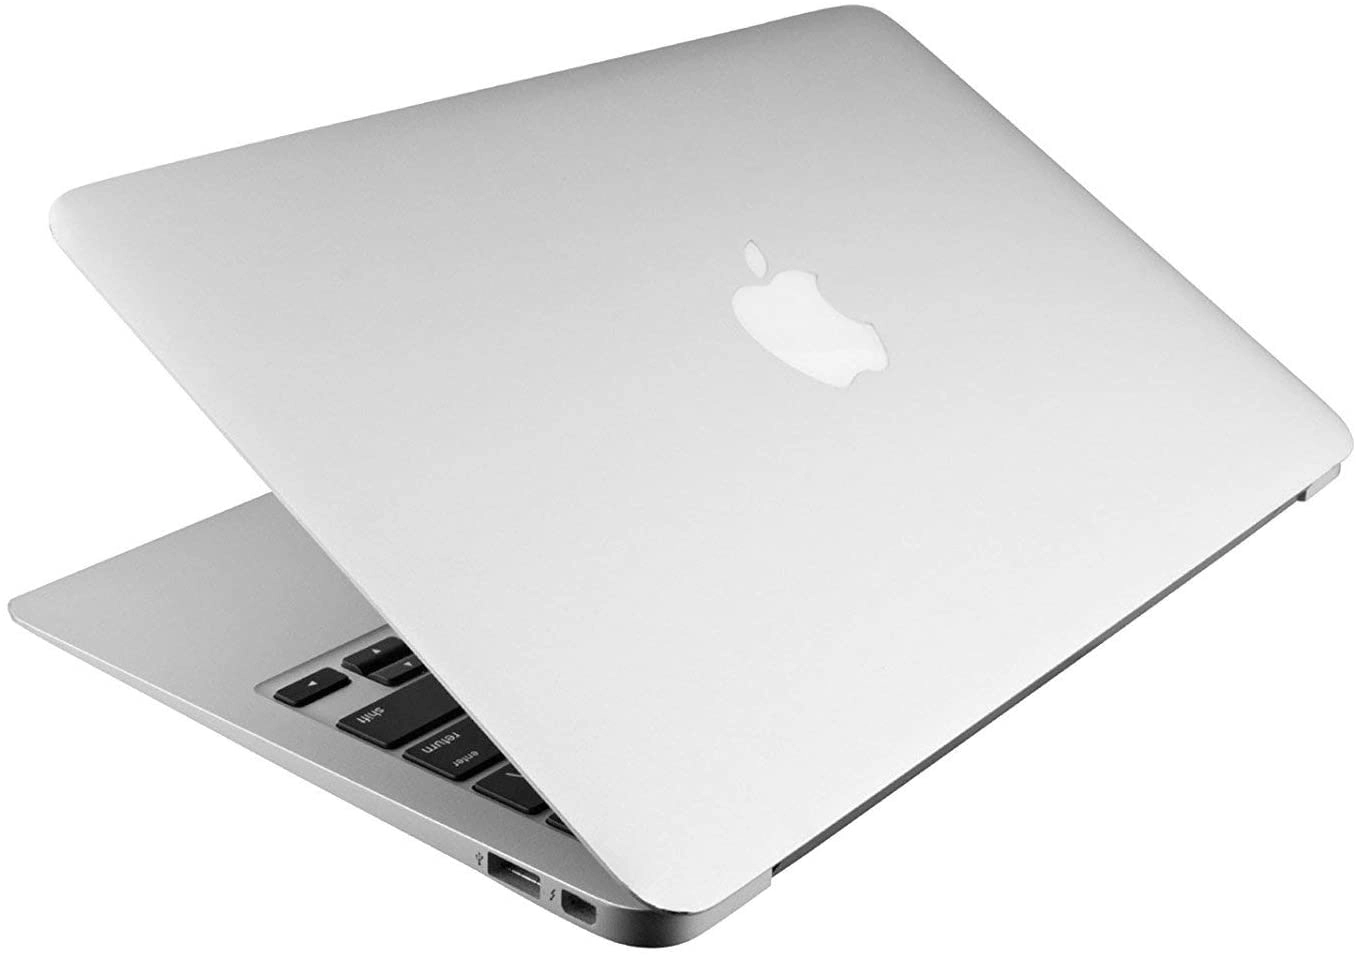 Apple MJVE2LL/A laptop image